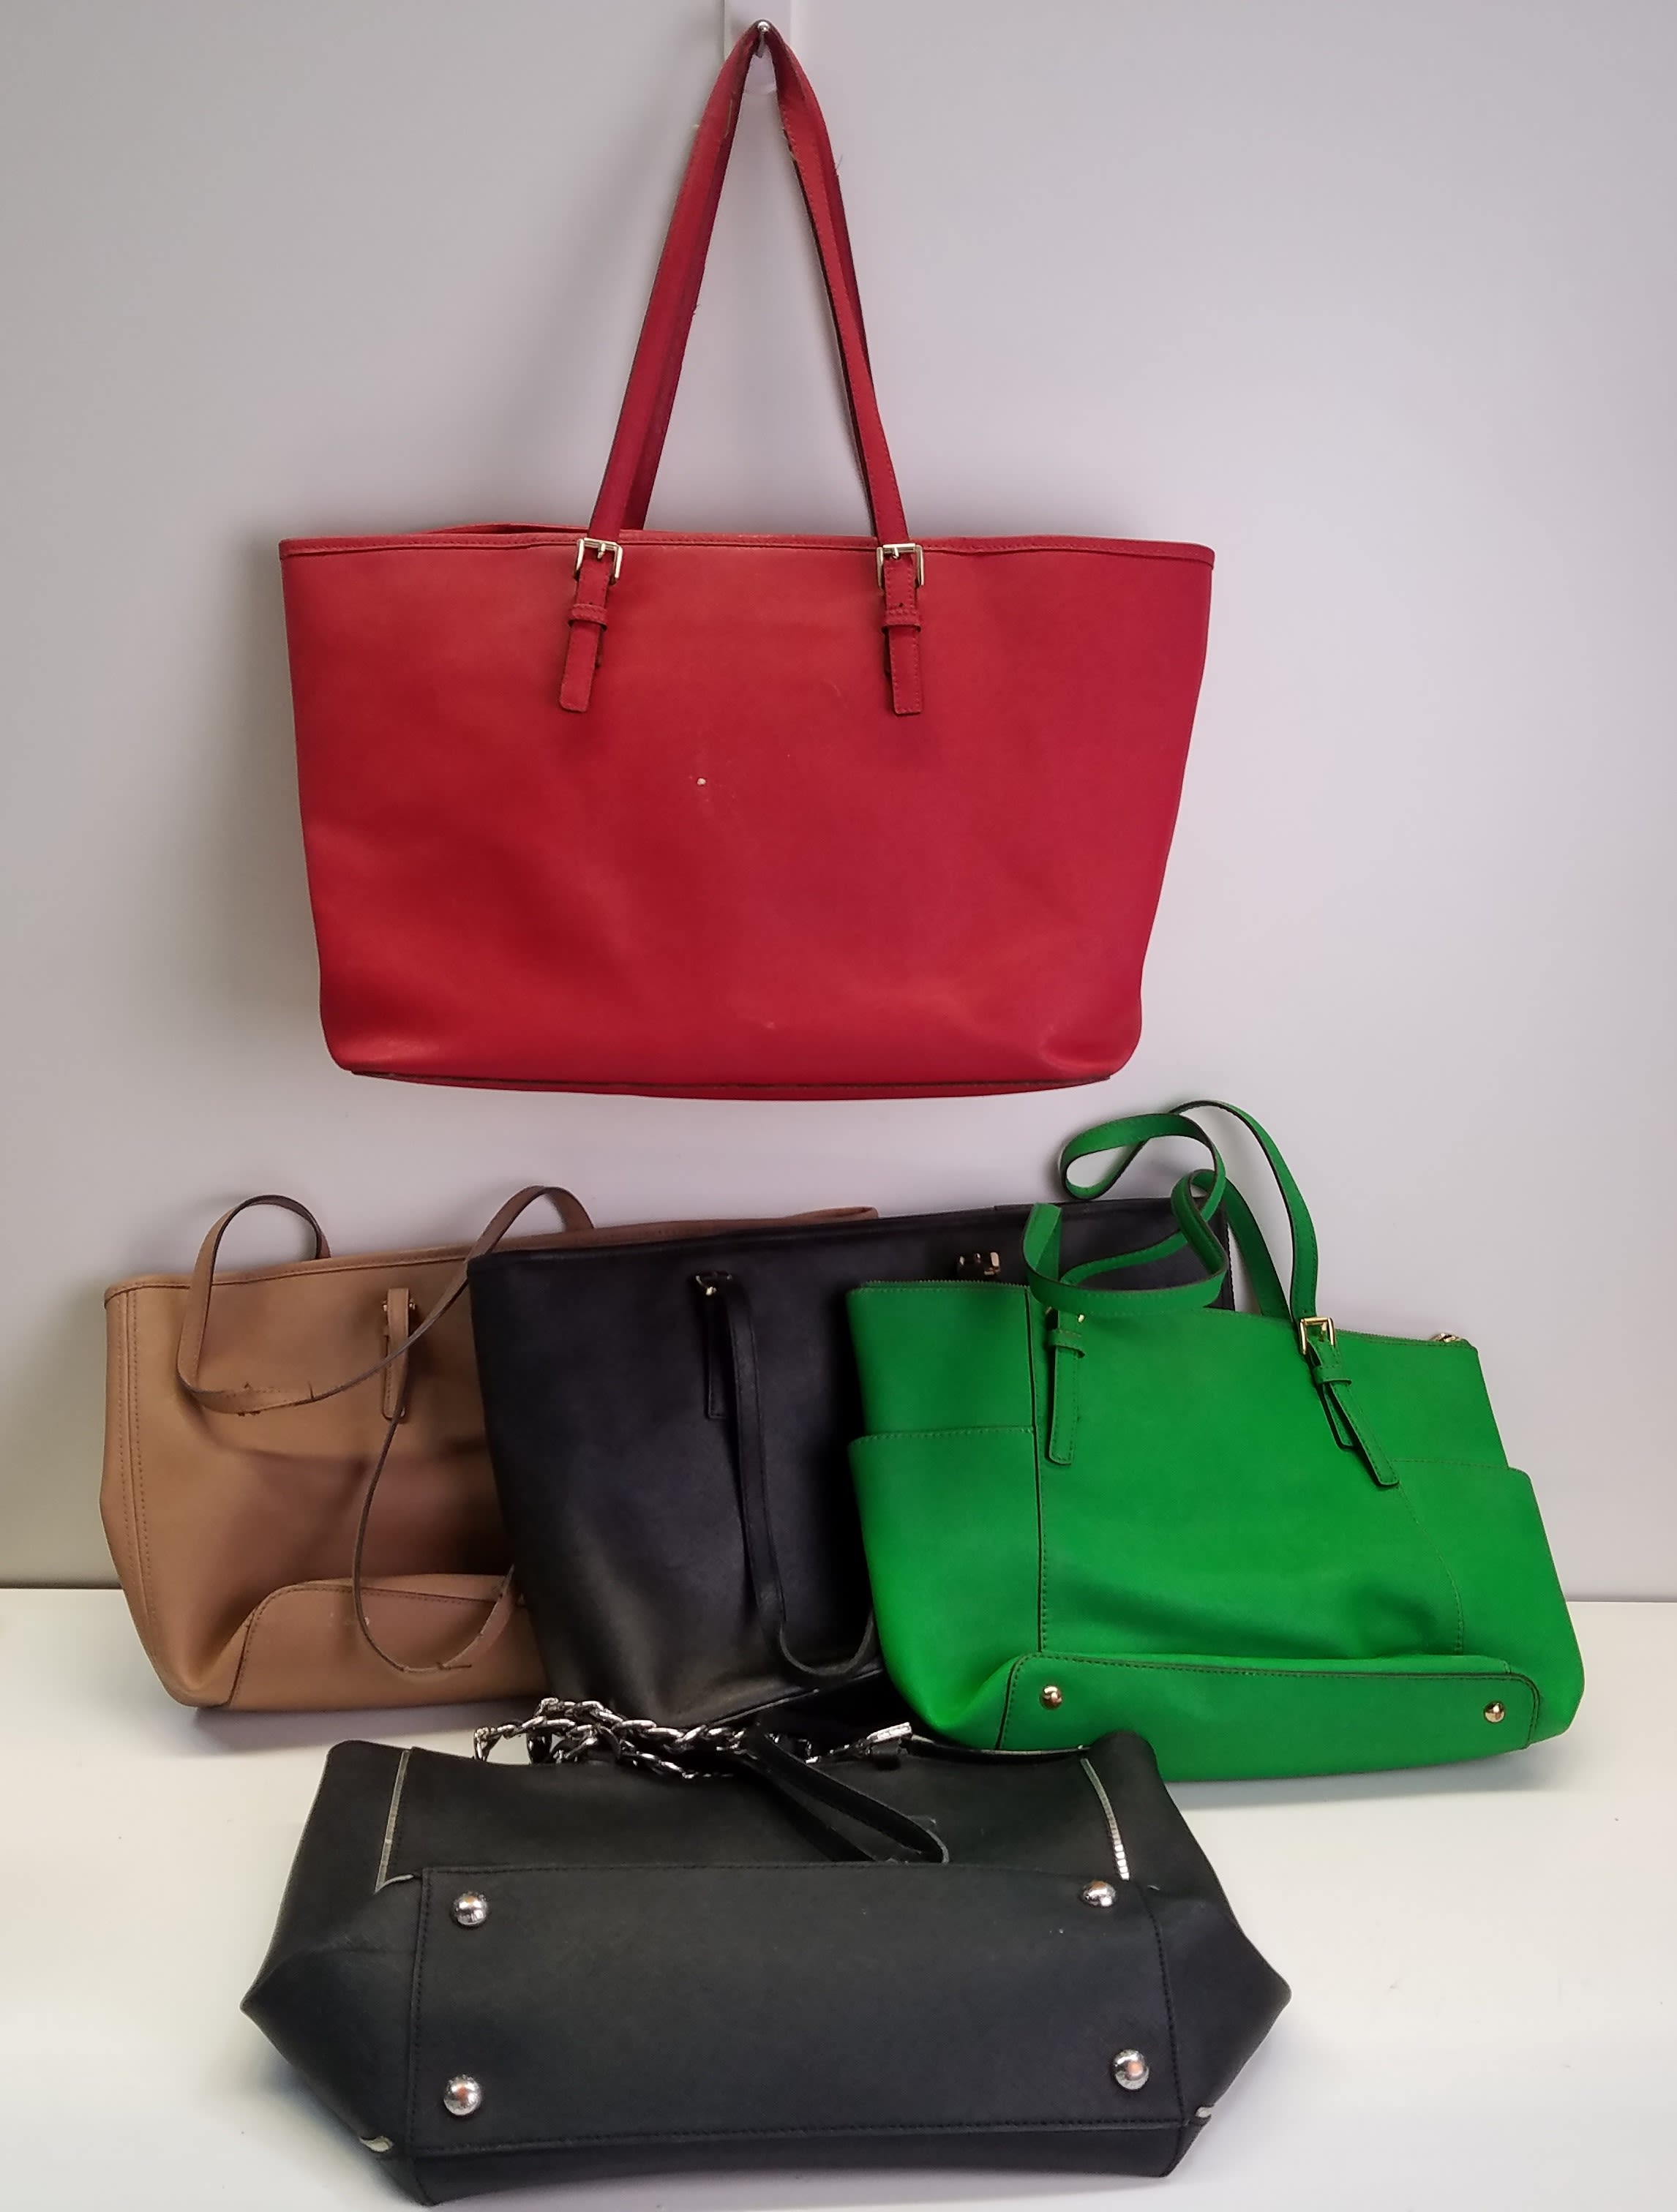 Buy the Michael Kors Saffiano Leather Shoulder Bag Bundle Lot of 5